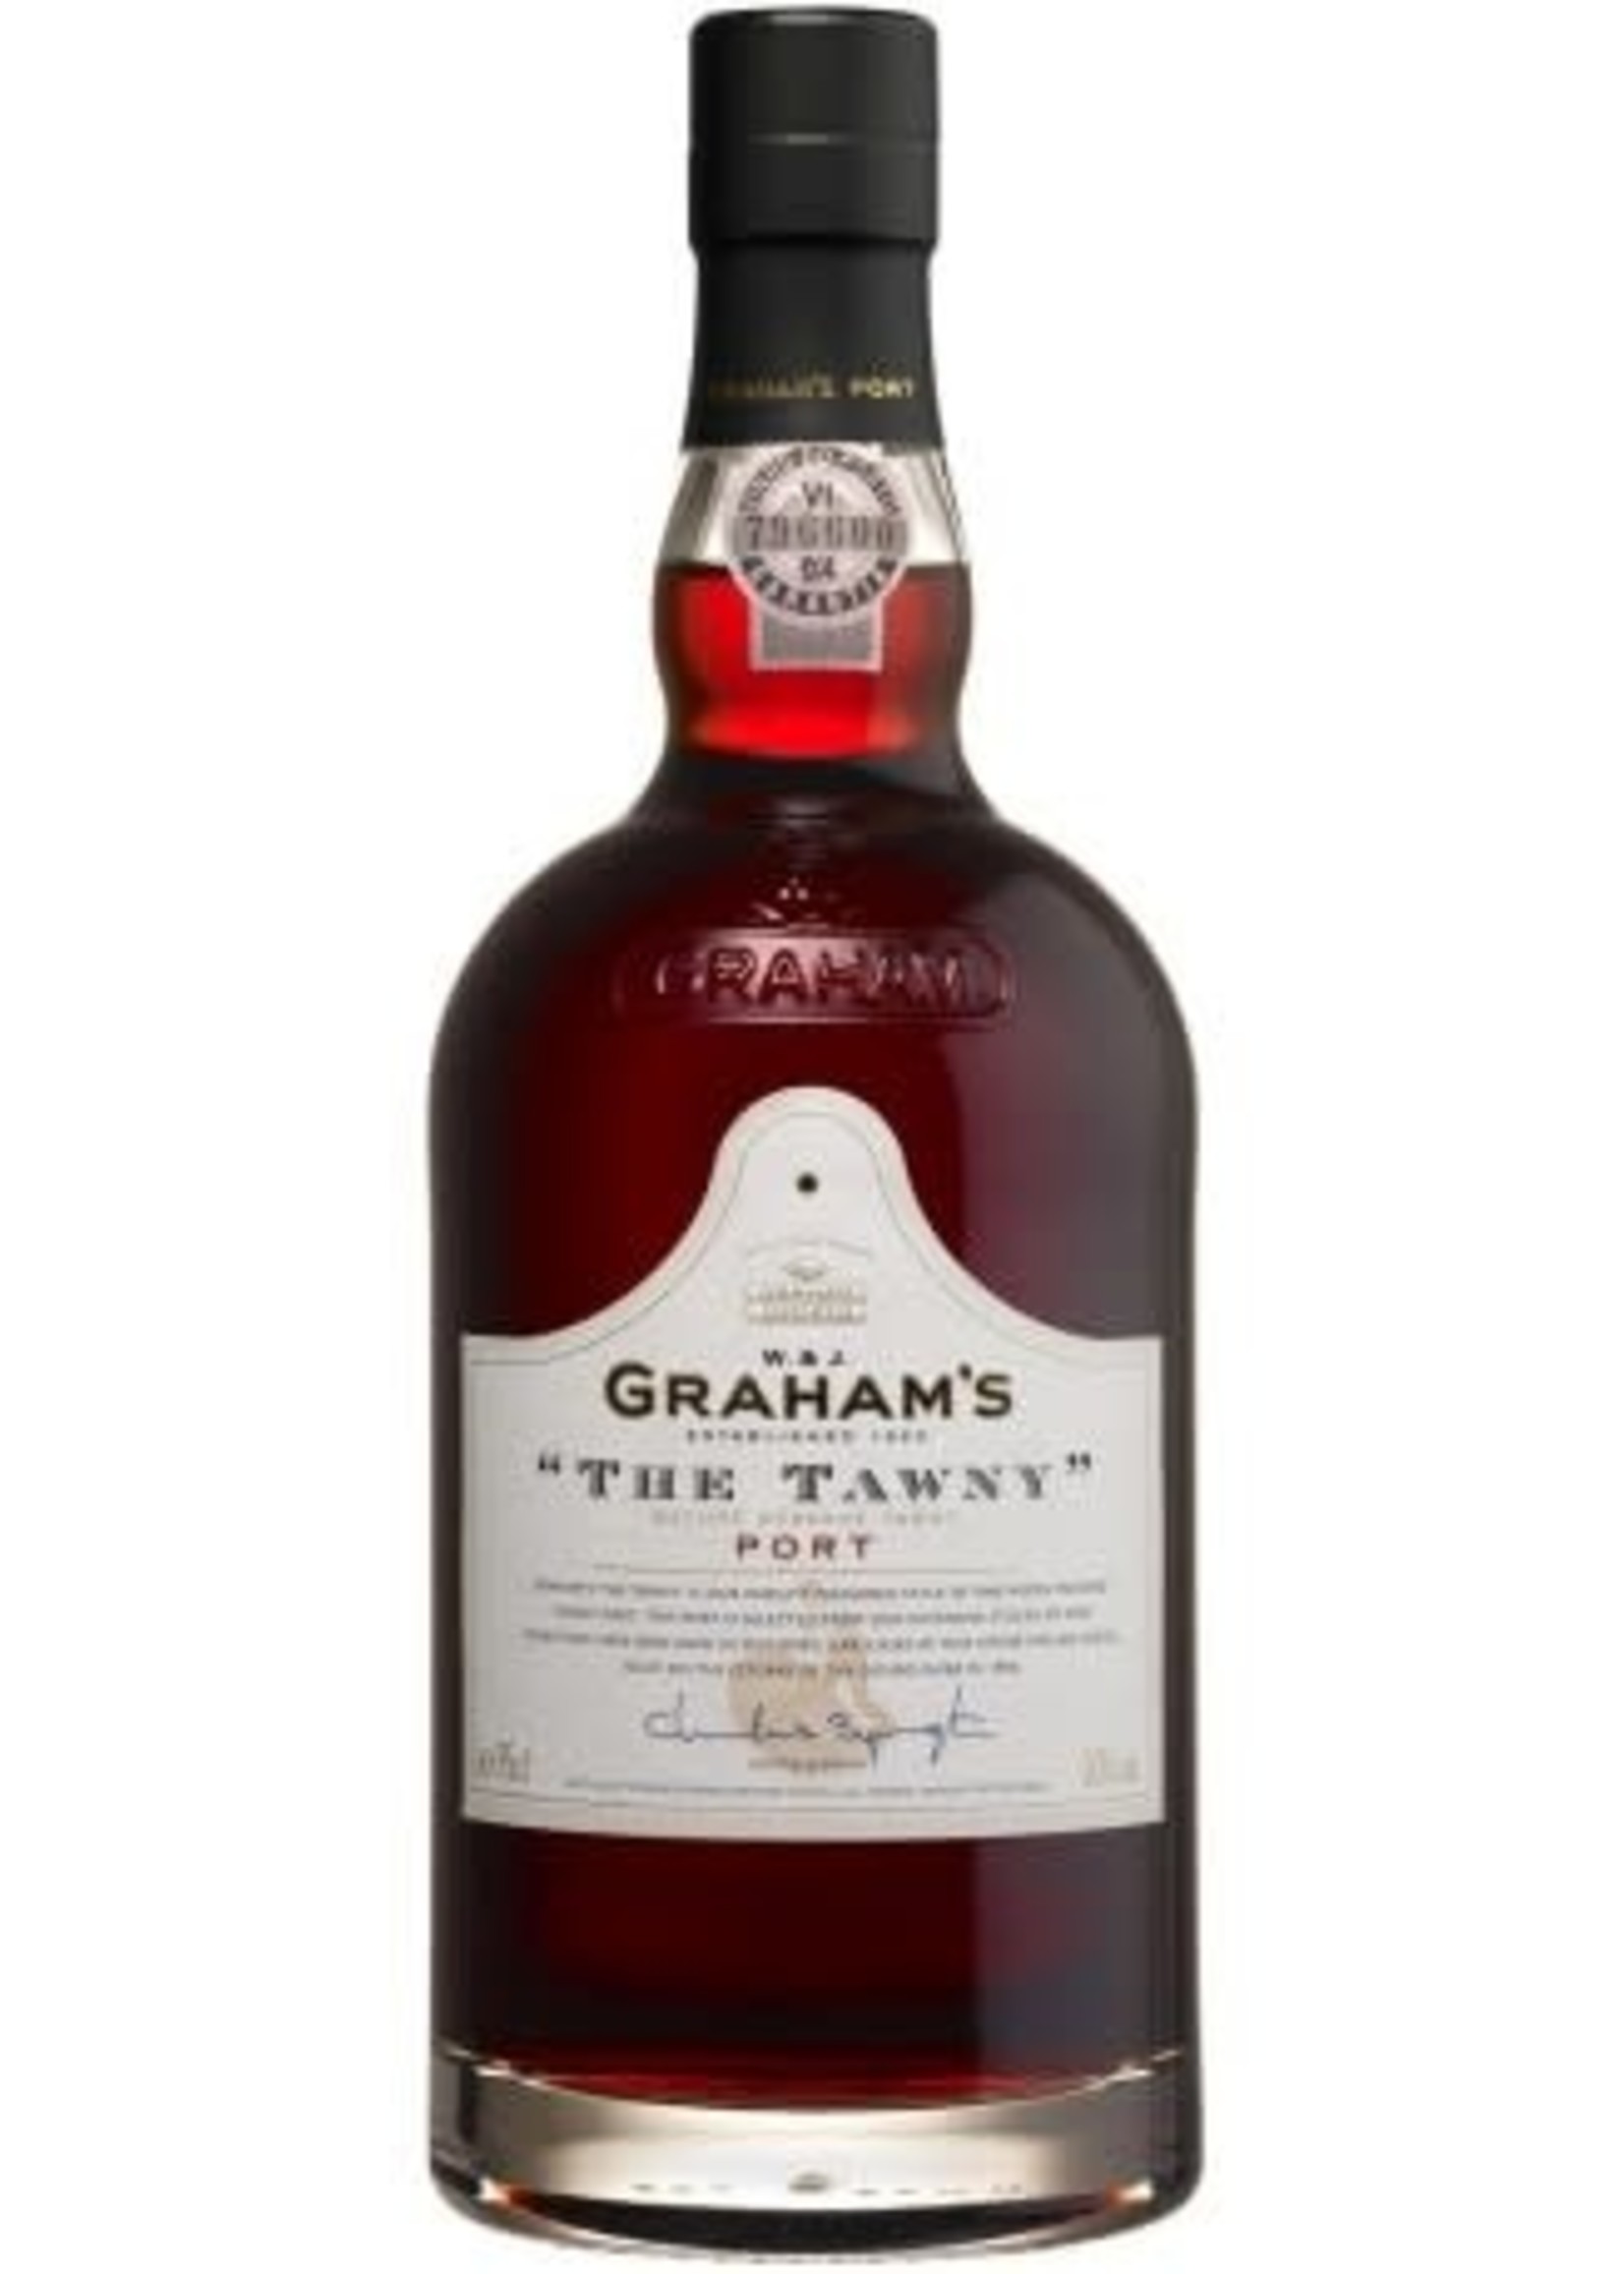 Graham Graham's Port The Tawny